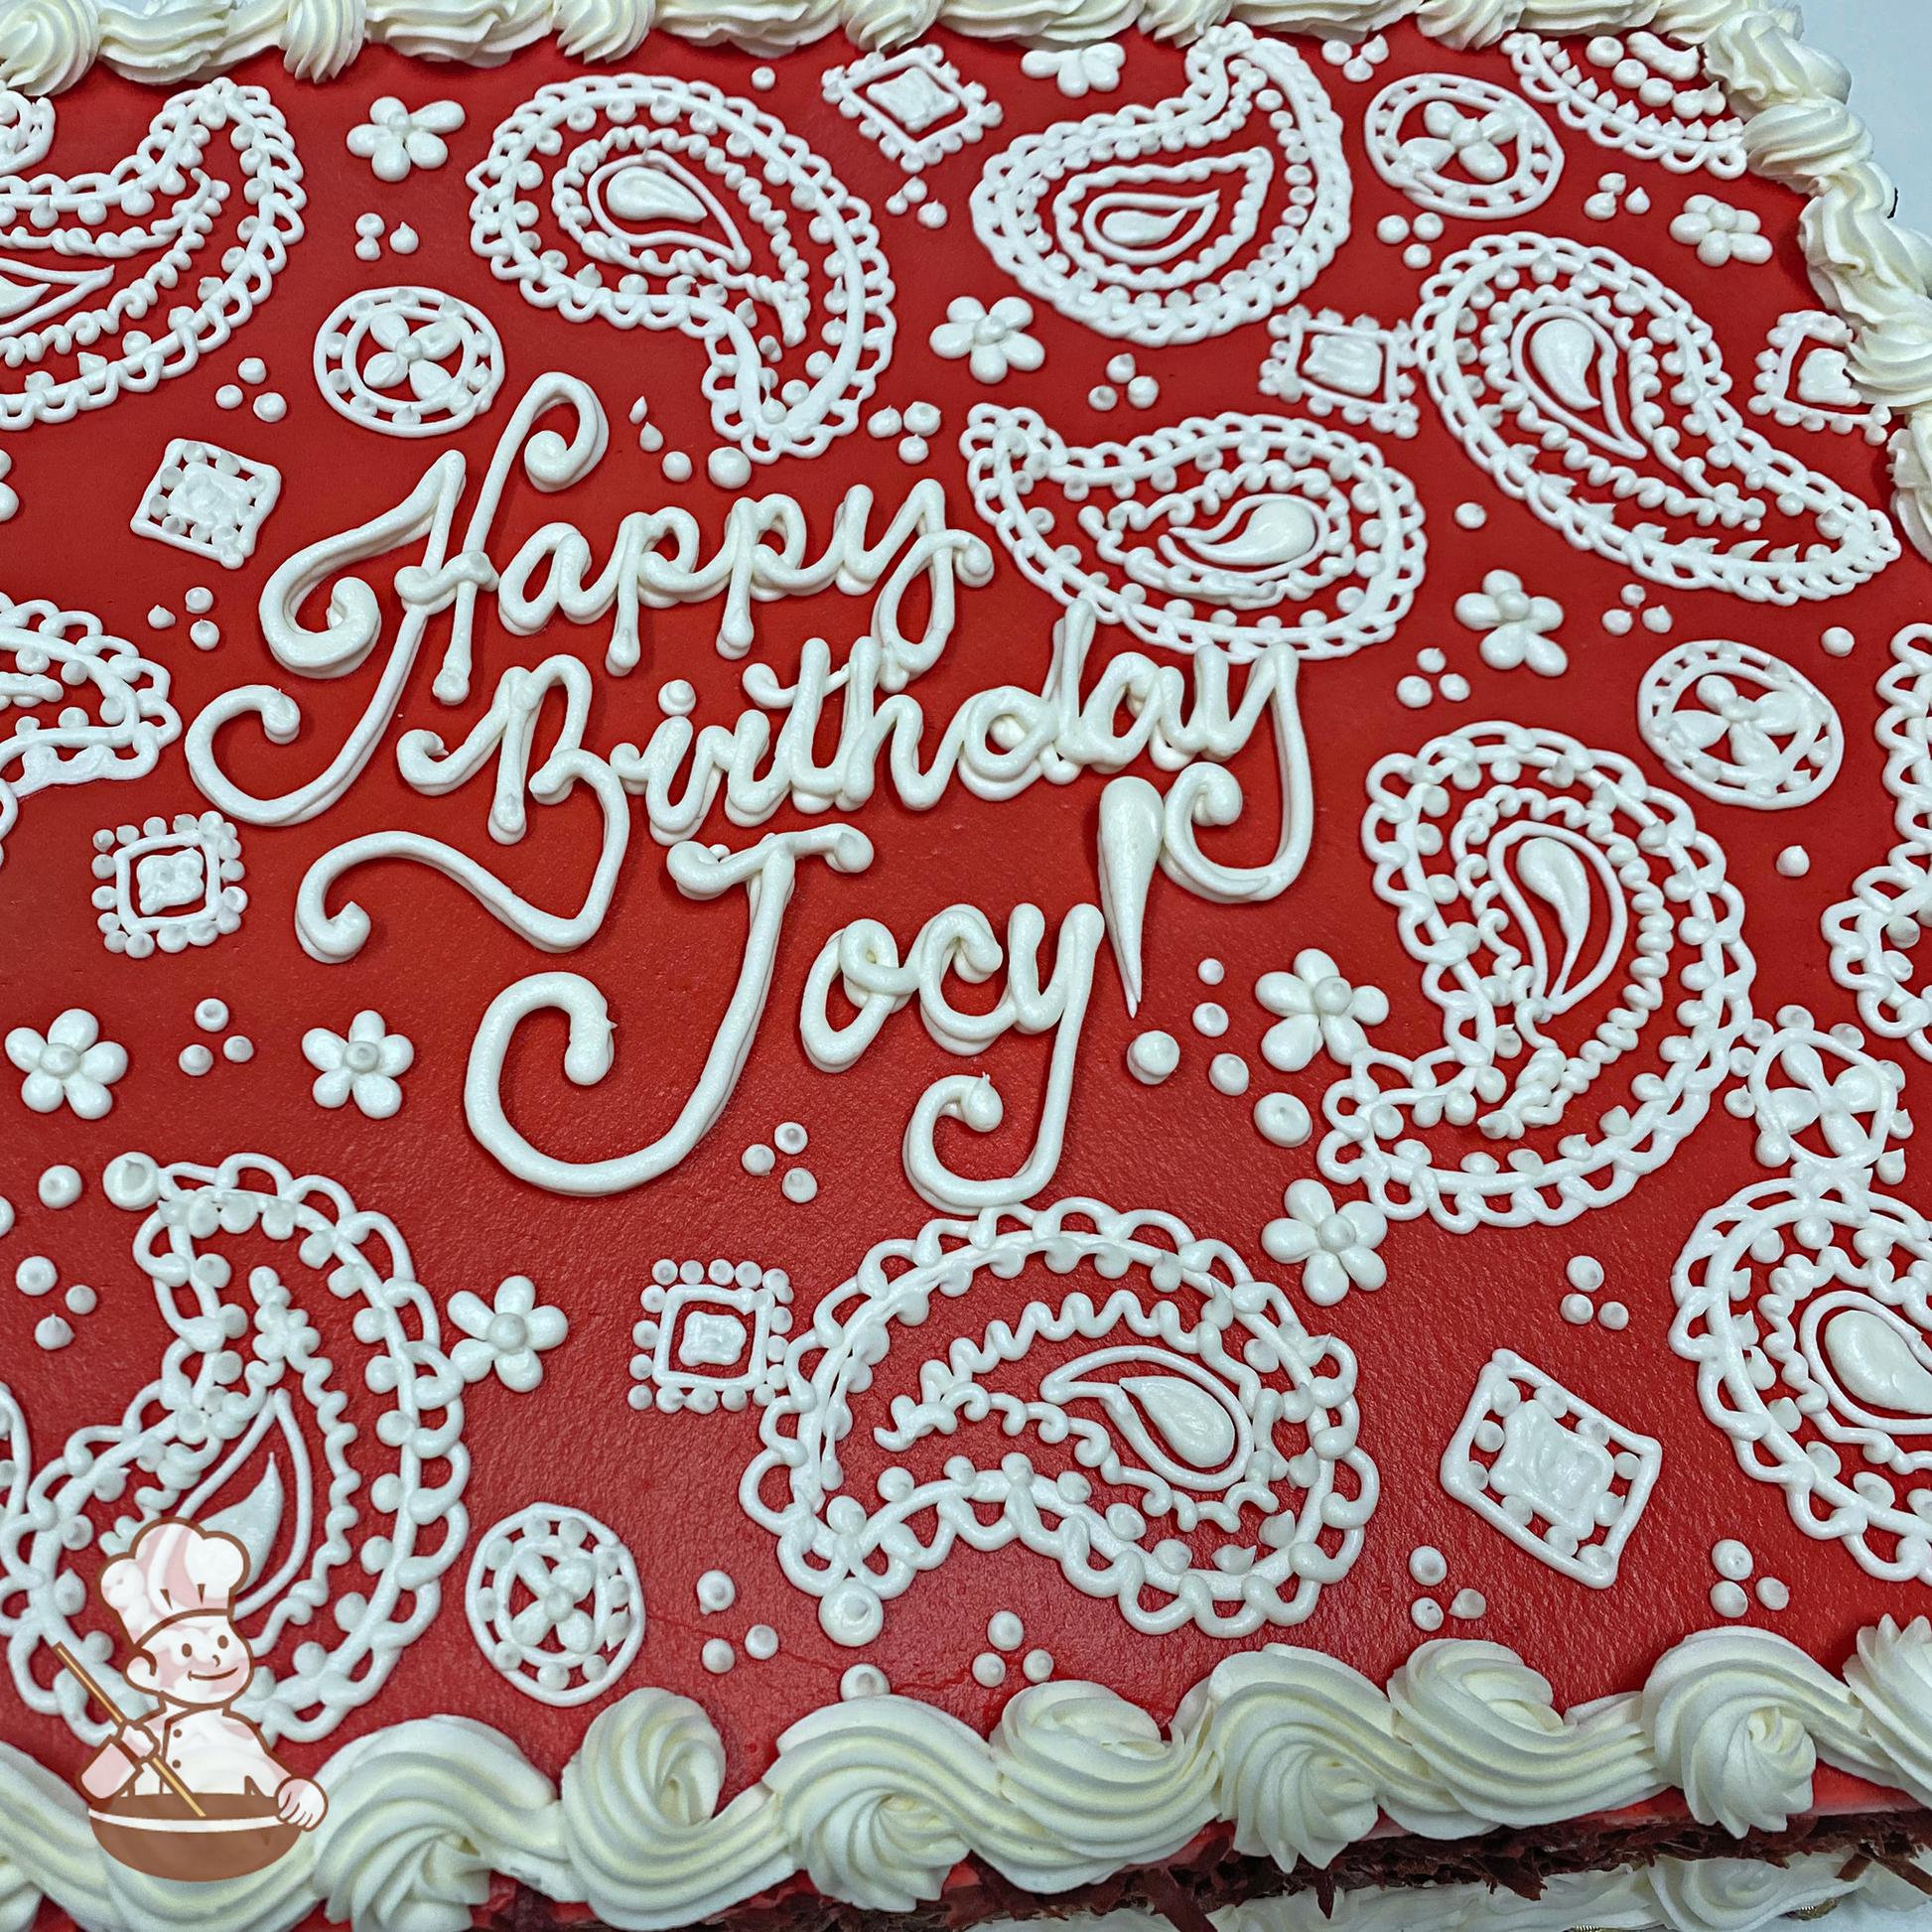 Birthday sheet cake with paisley patterns.